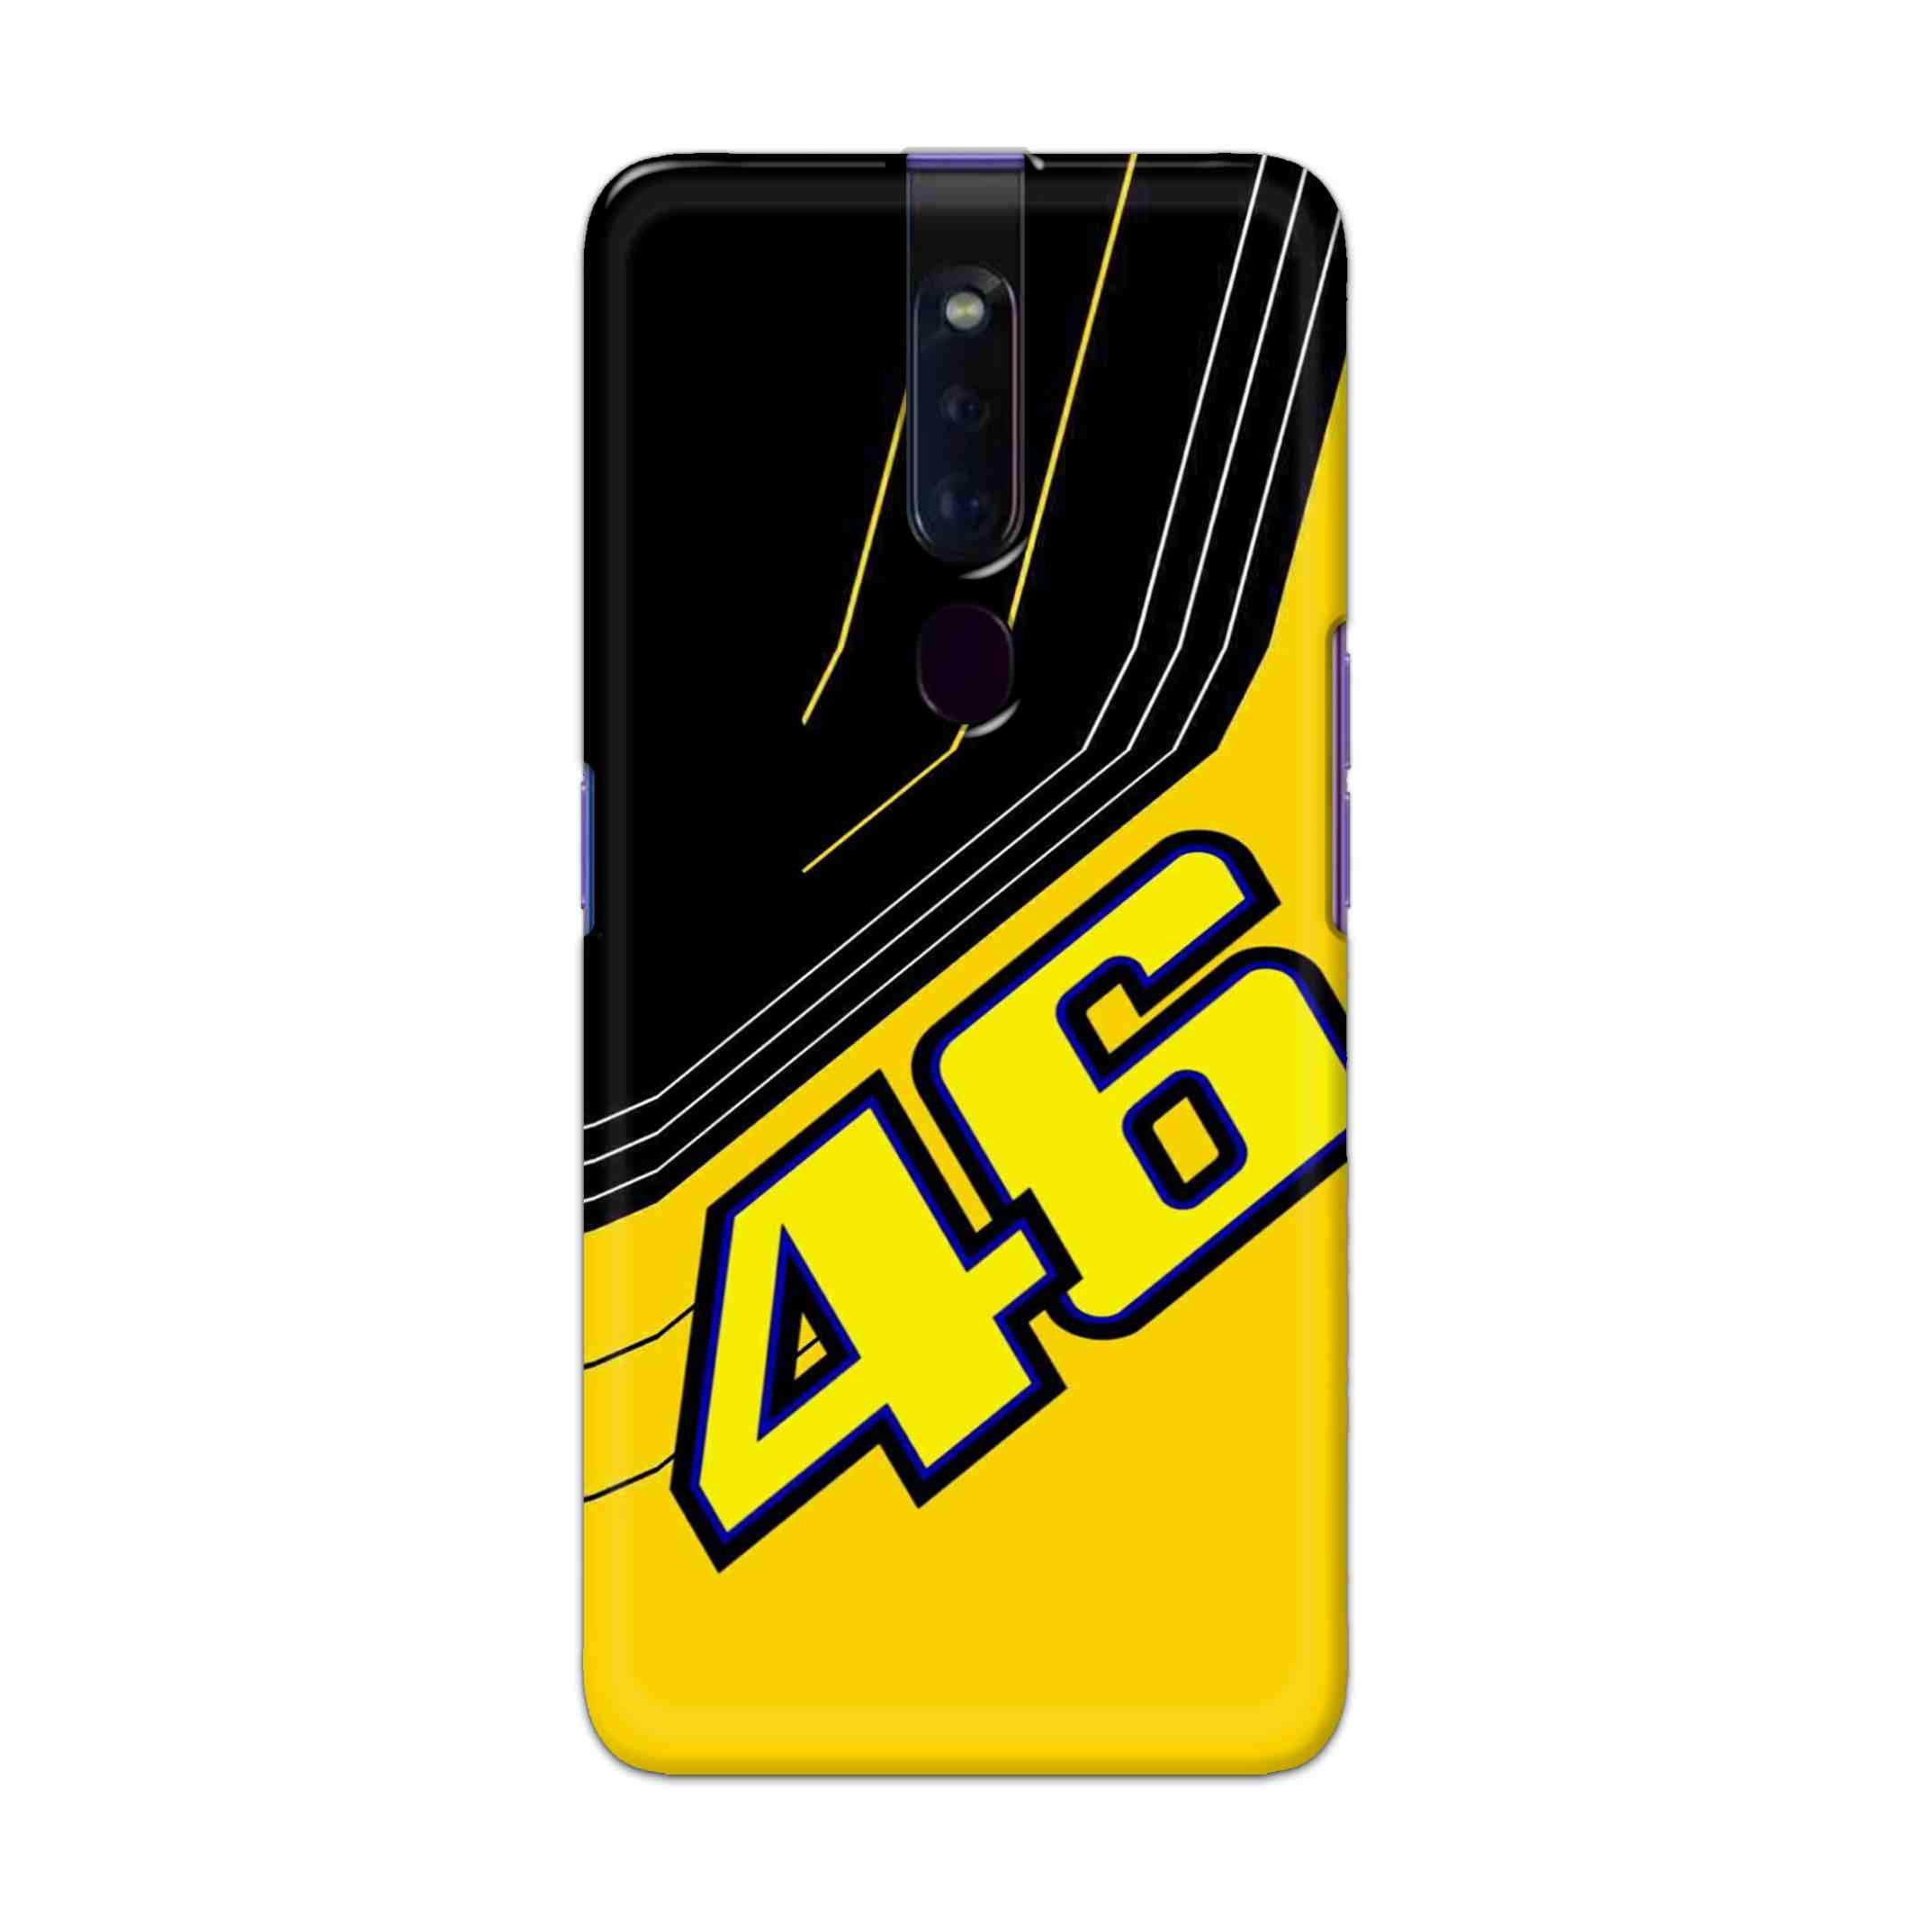 Buy 46 Hard Back Mobile Phone Case Cover For Oppo F11 Pro Online